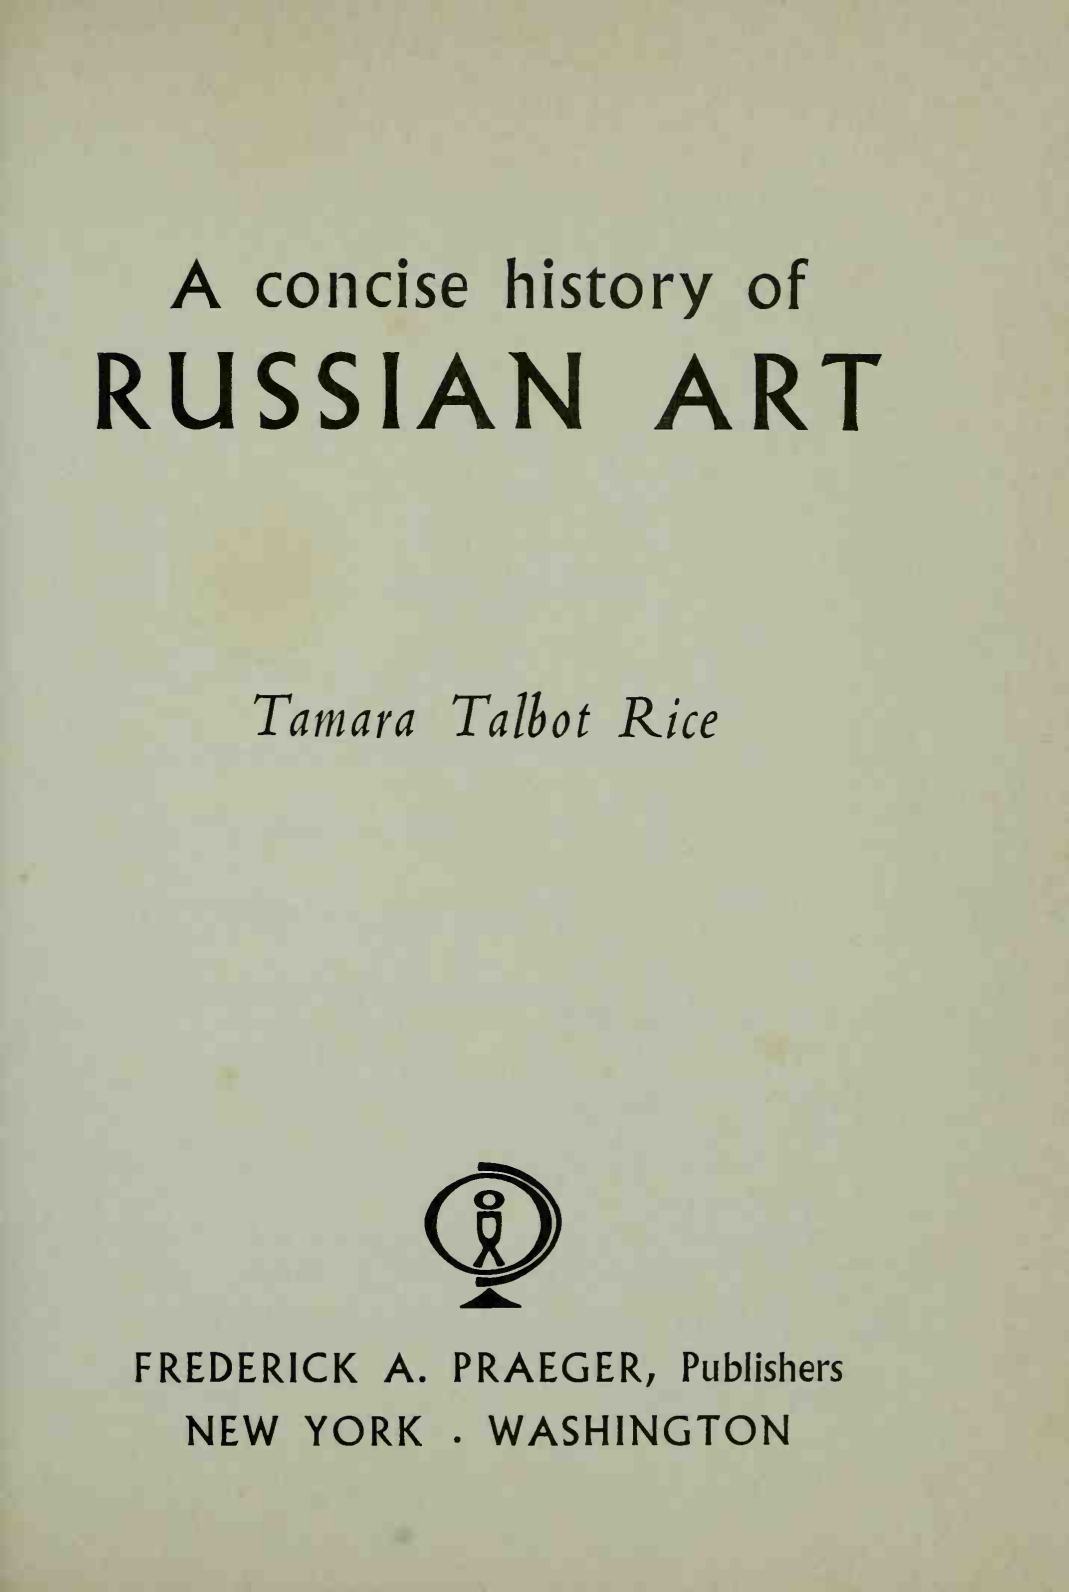 A concise history of Russian art / Tamara Talbot Rice. — New York ; Washington : Frederick A. Praeger, Publishers, 1963